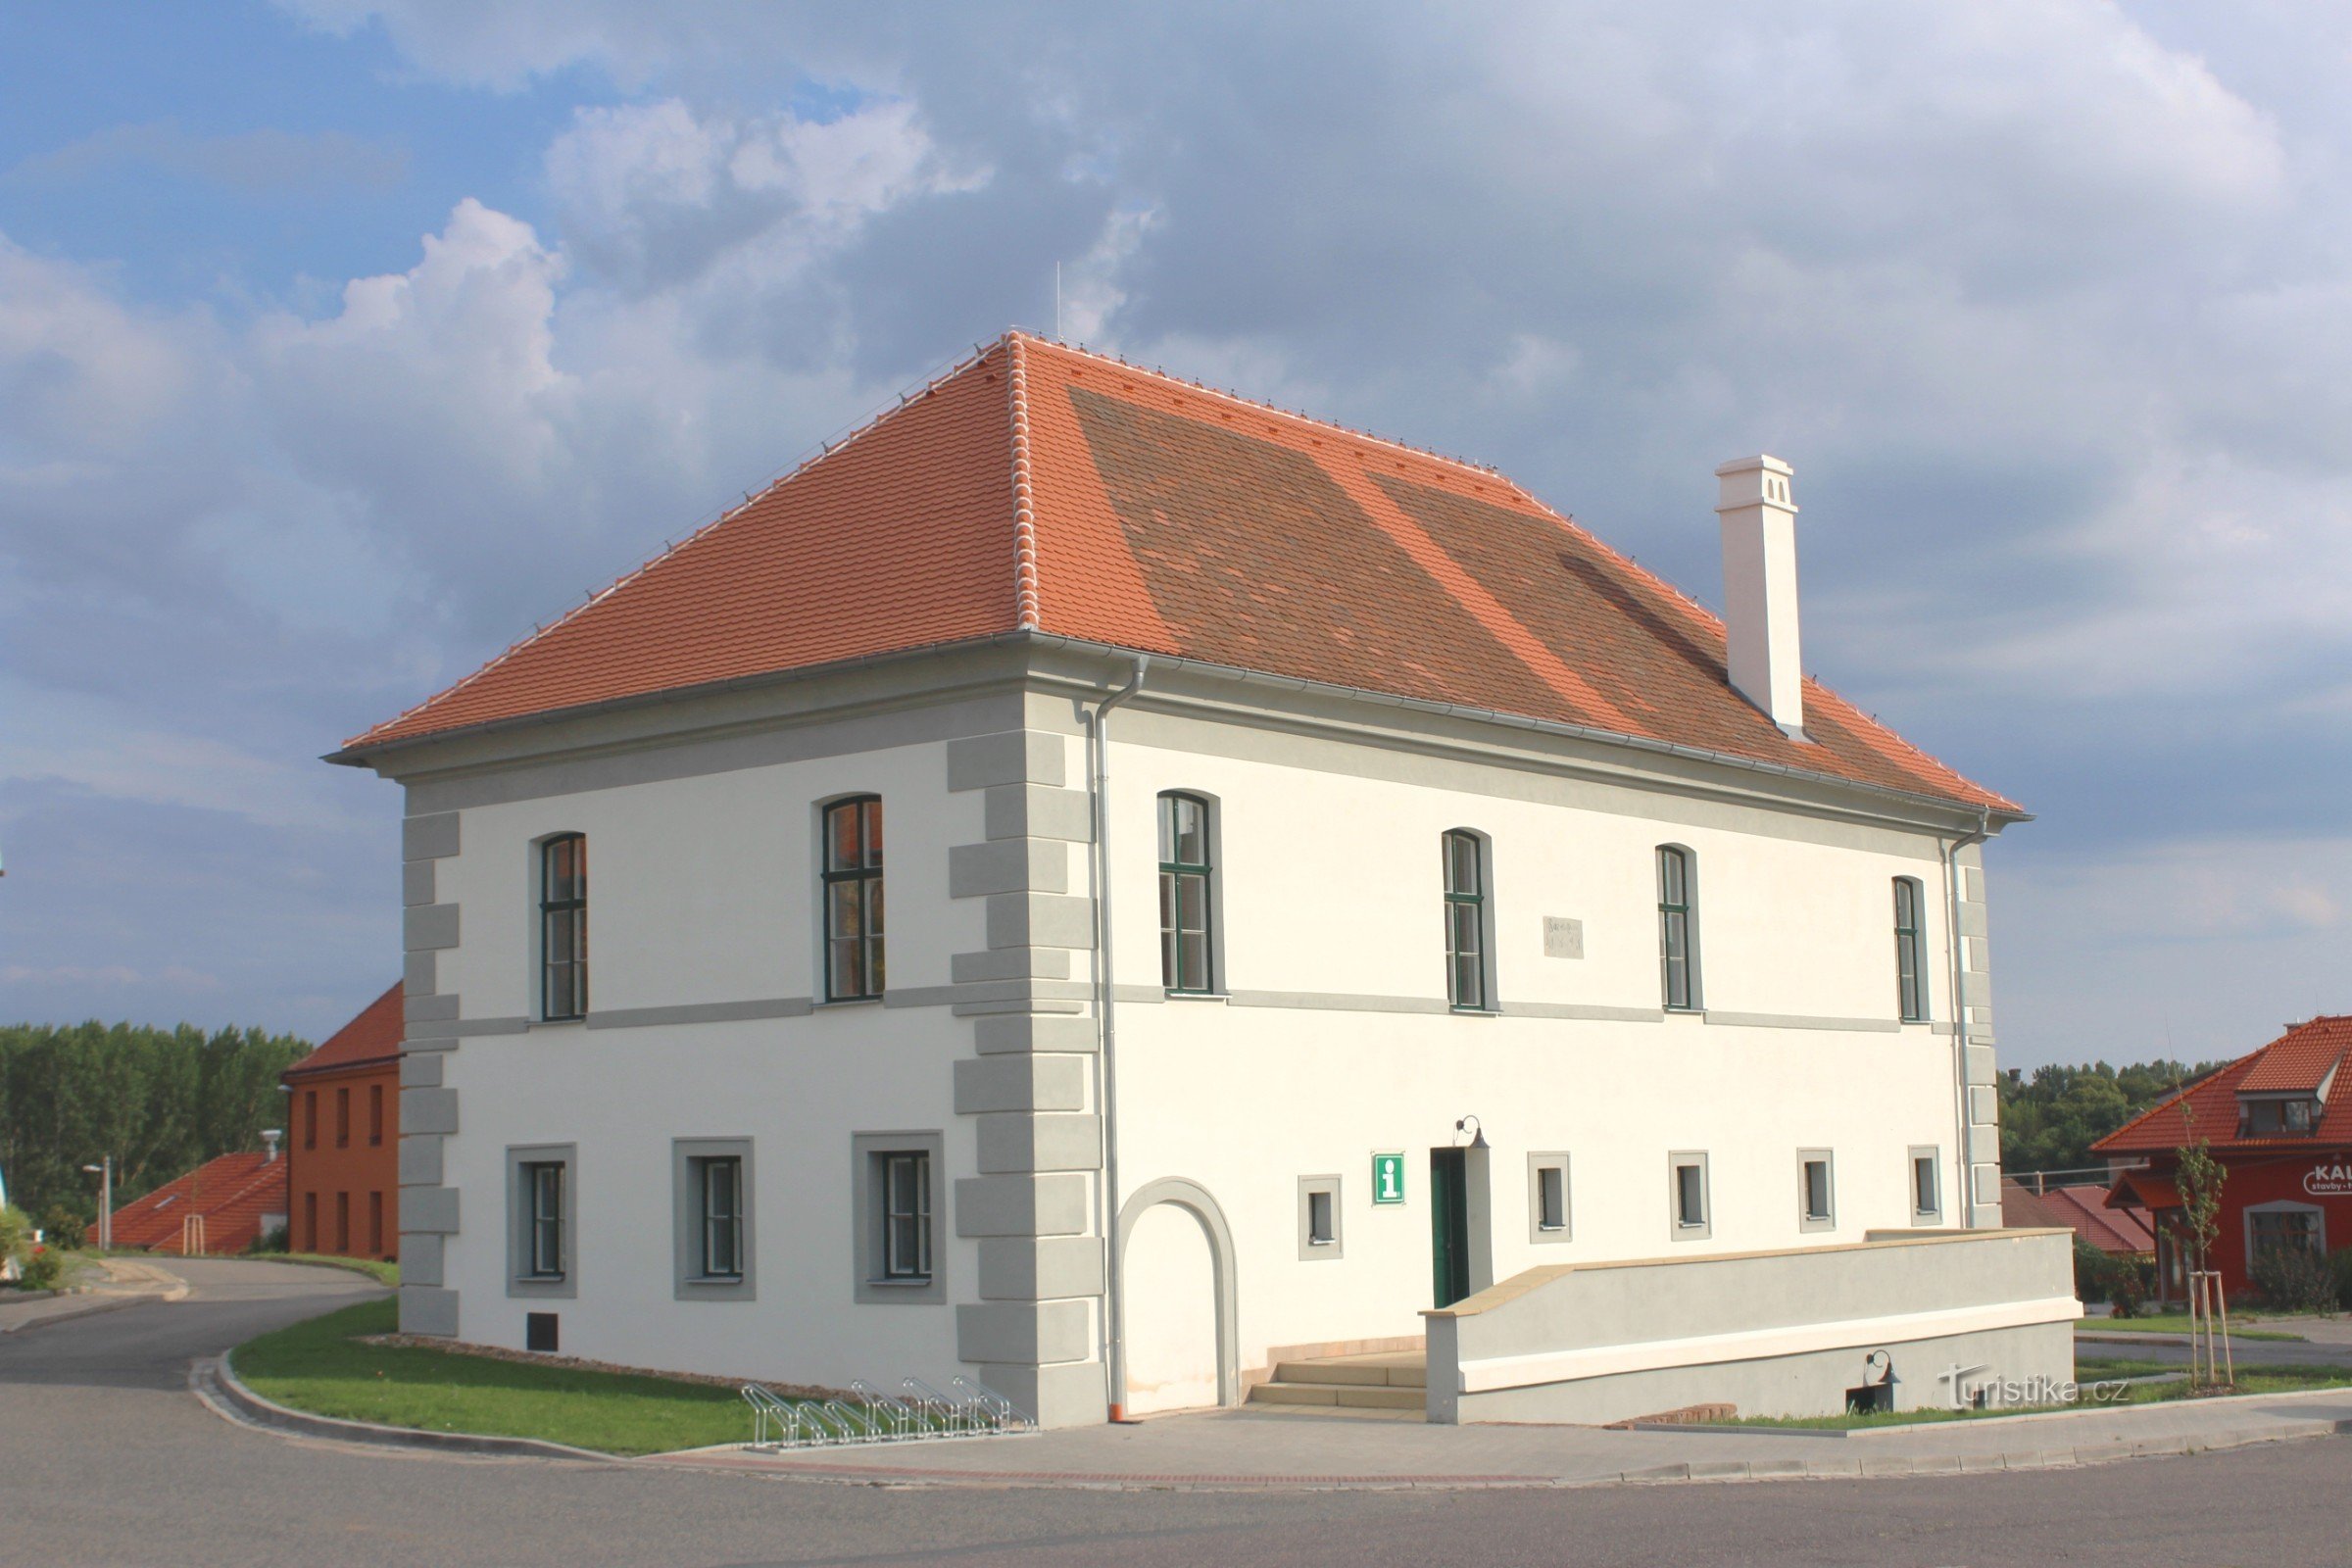 Drnholec - Rådhusets facade